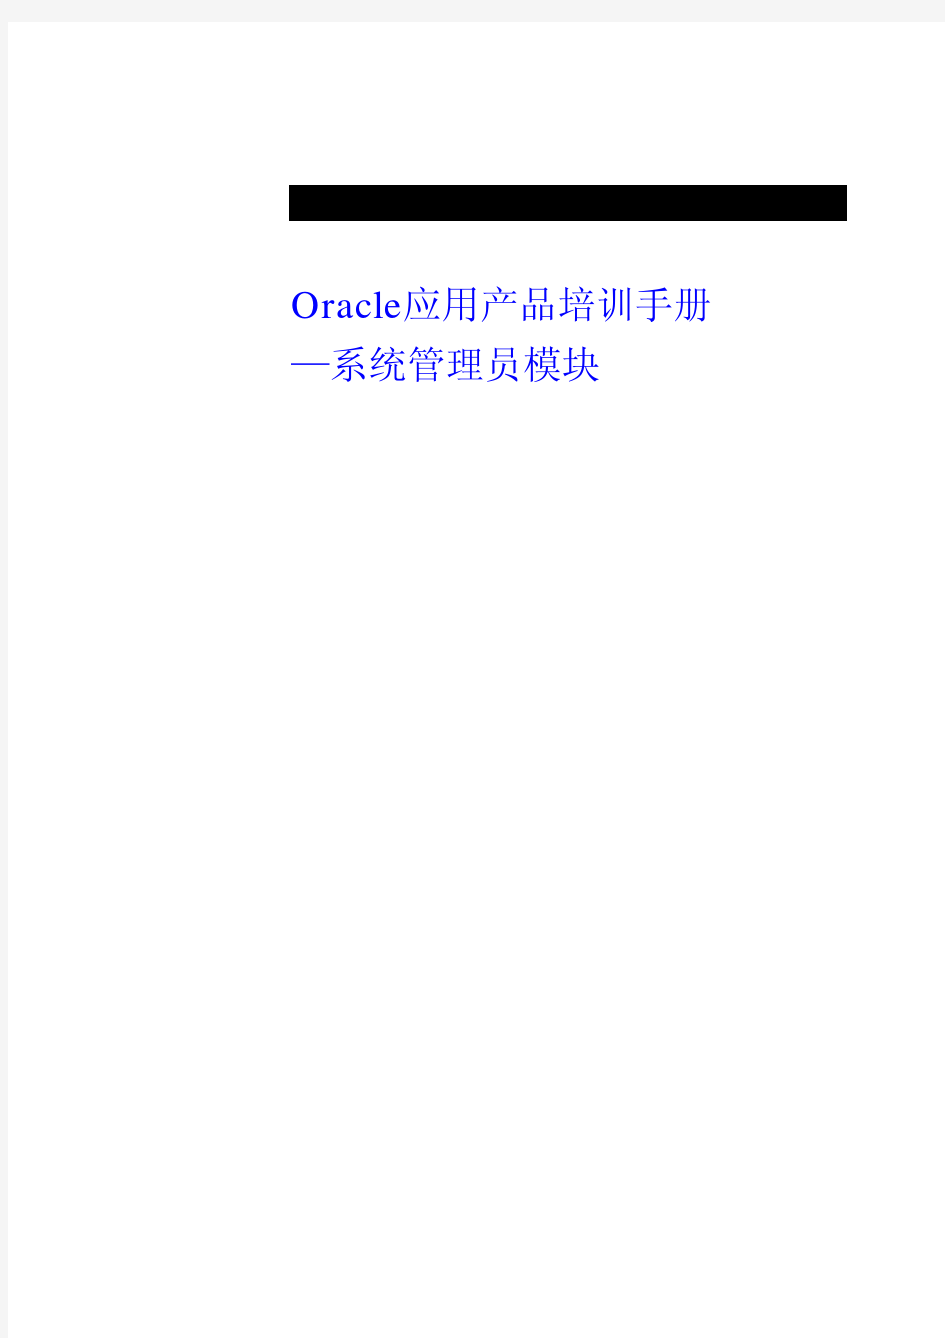 Oracle EBS系统管理员手册